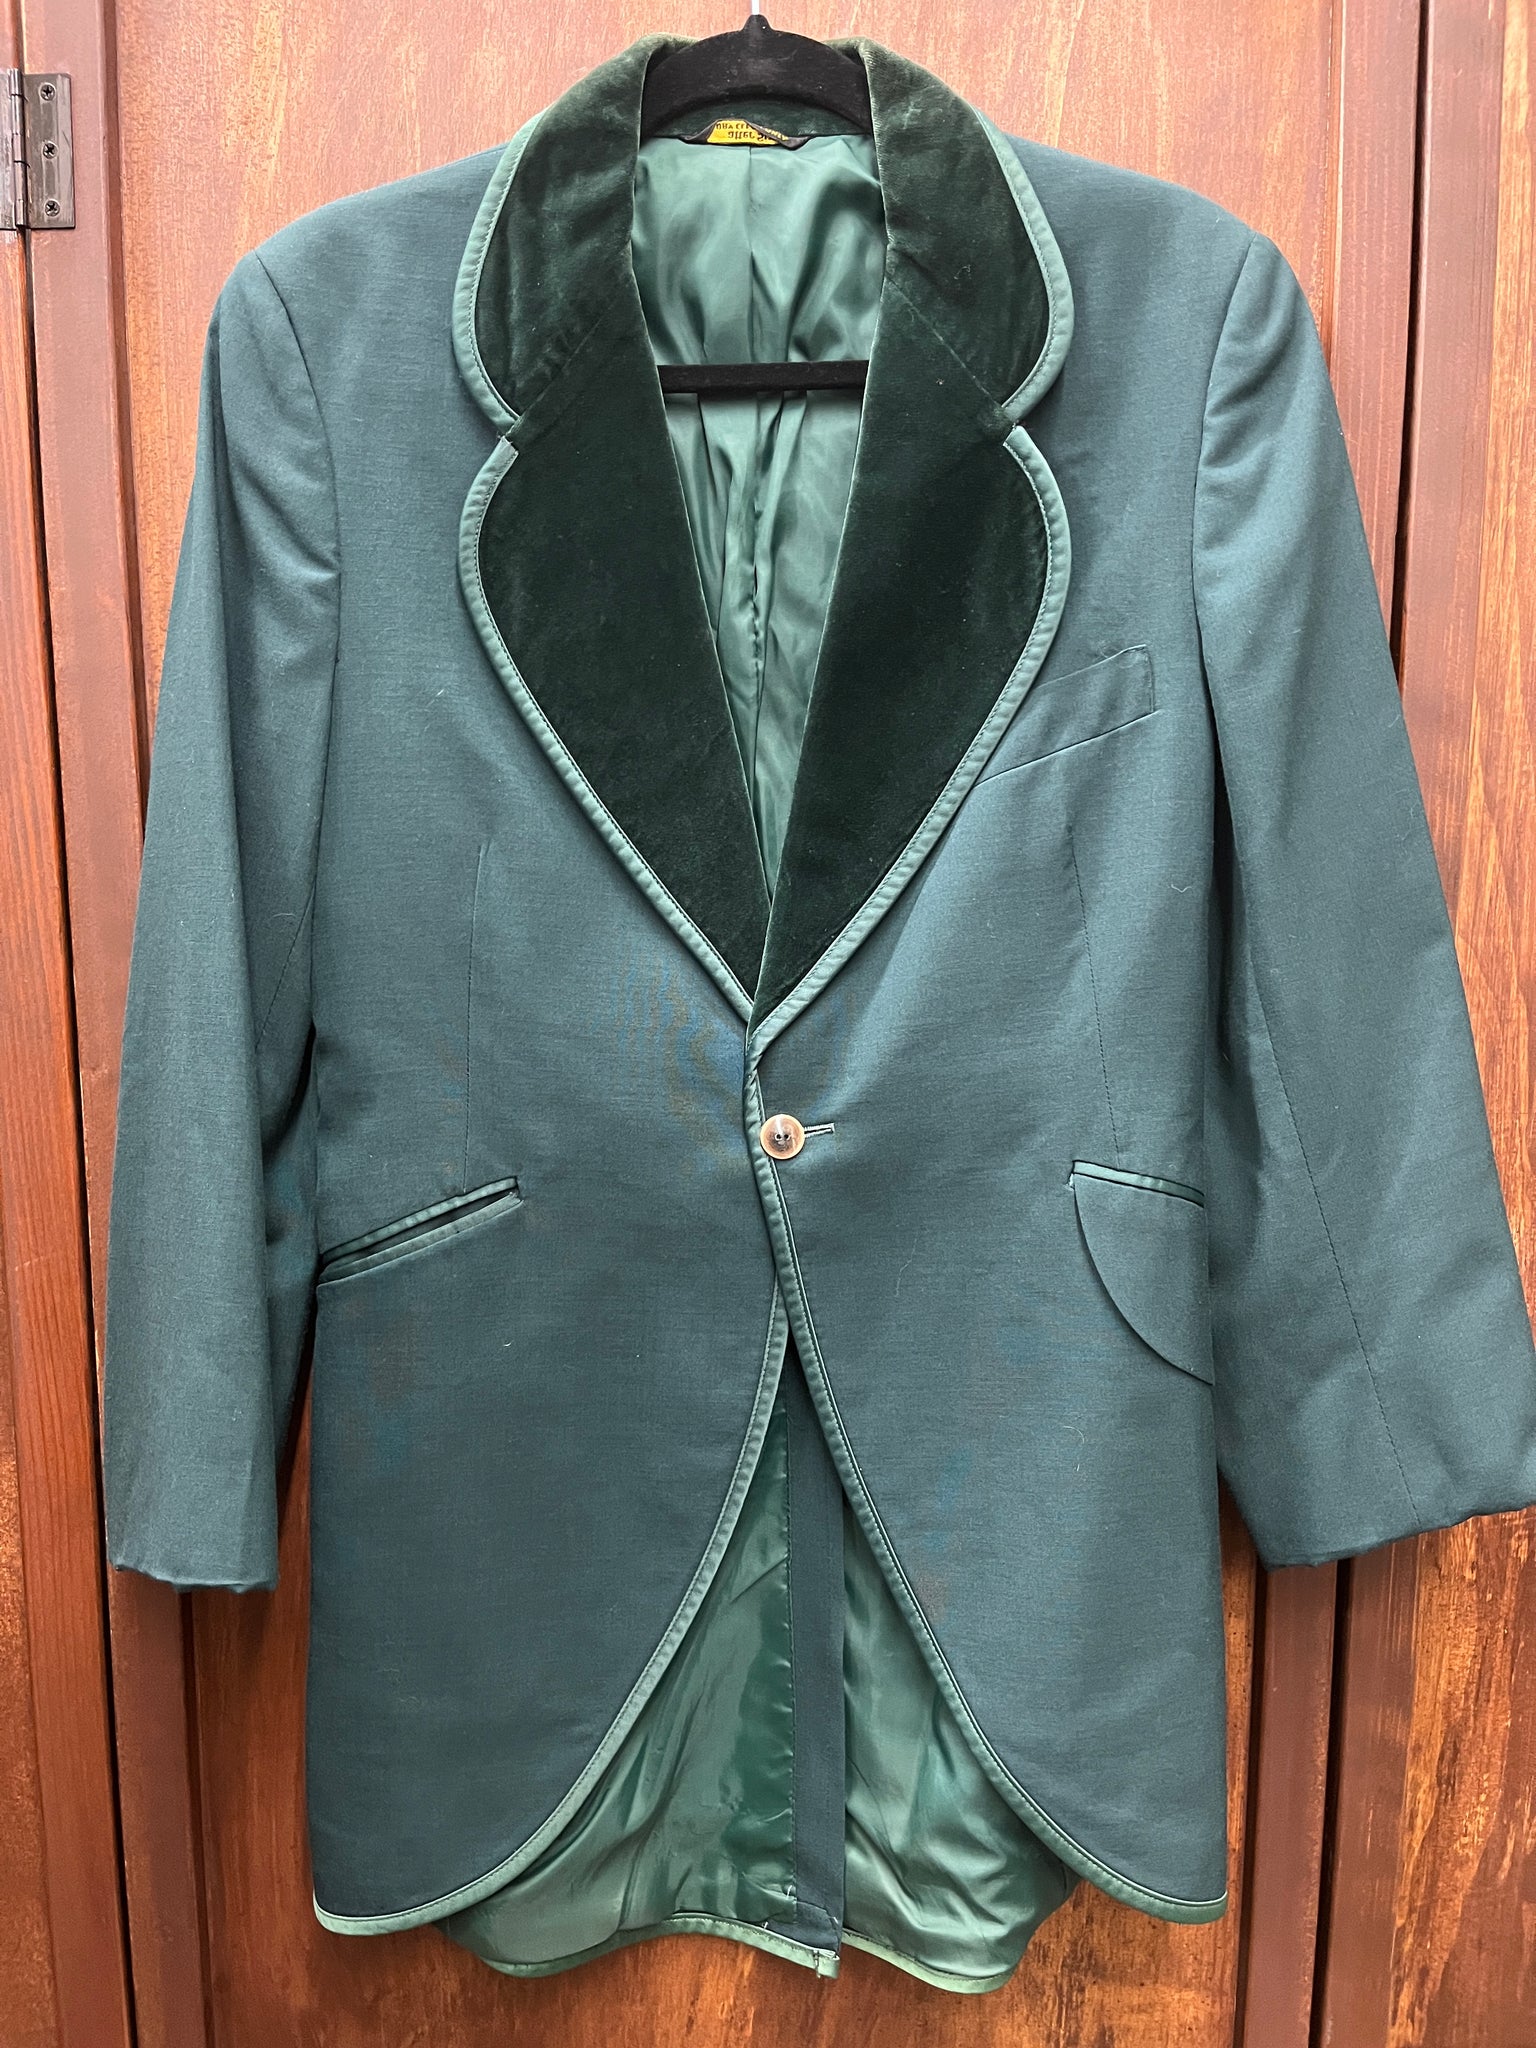 1970s forrest green tuxedo jacket